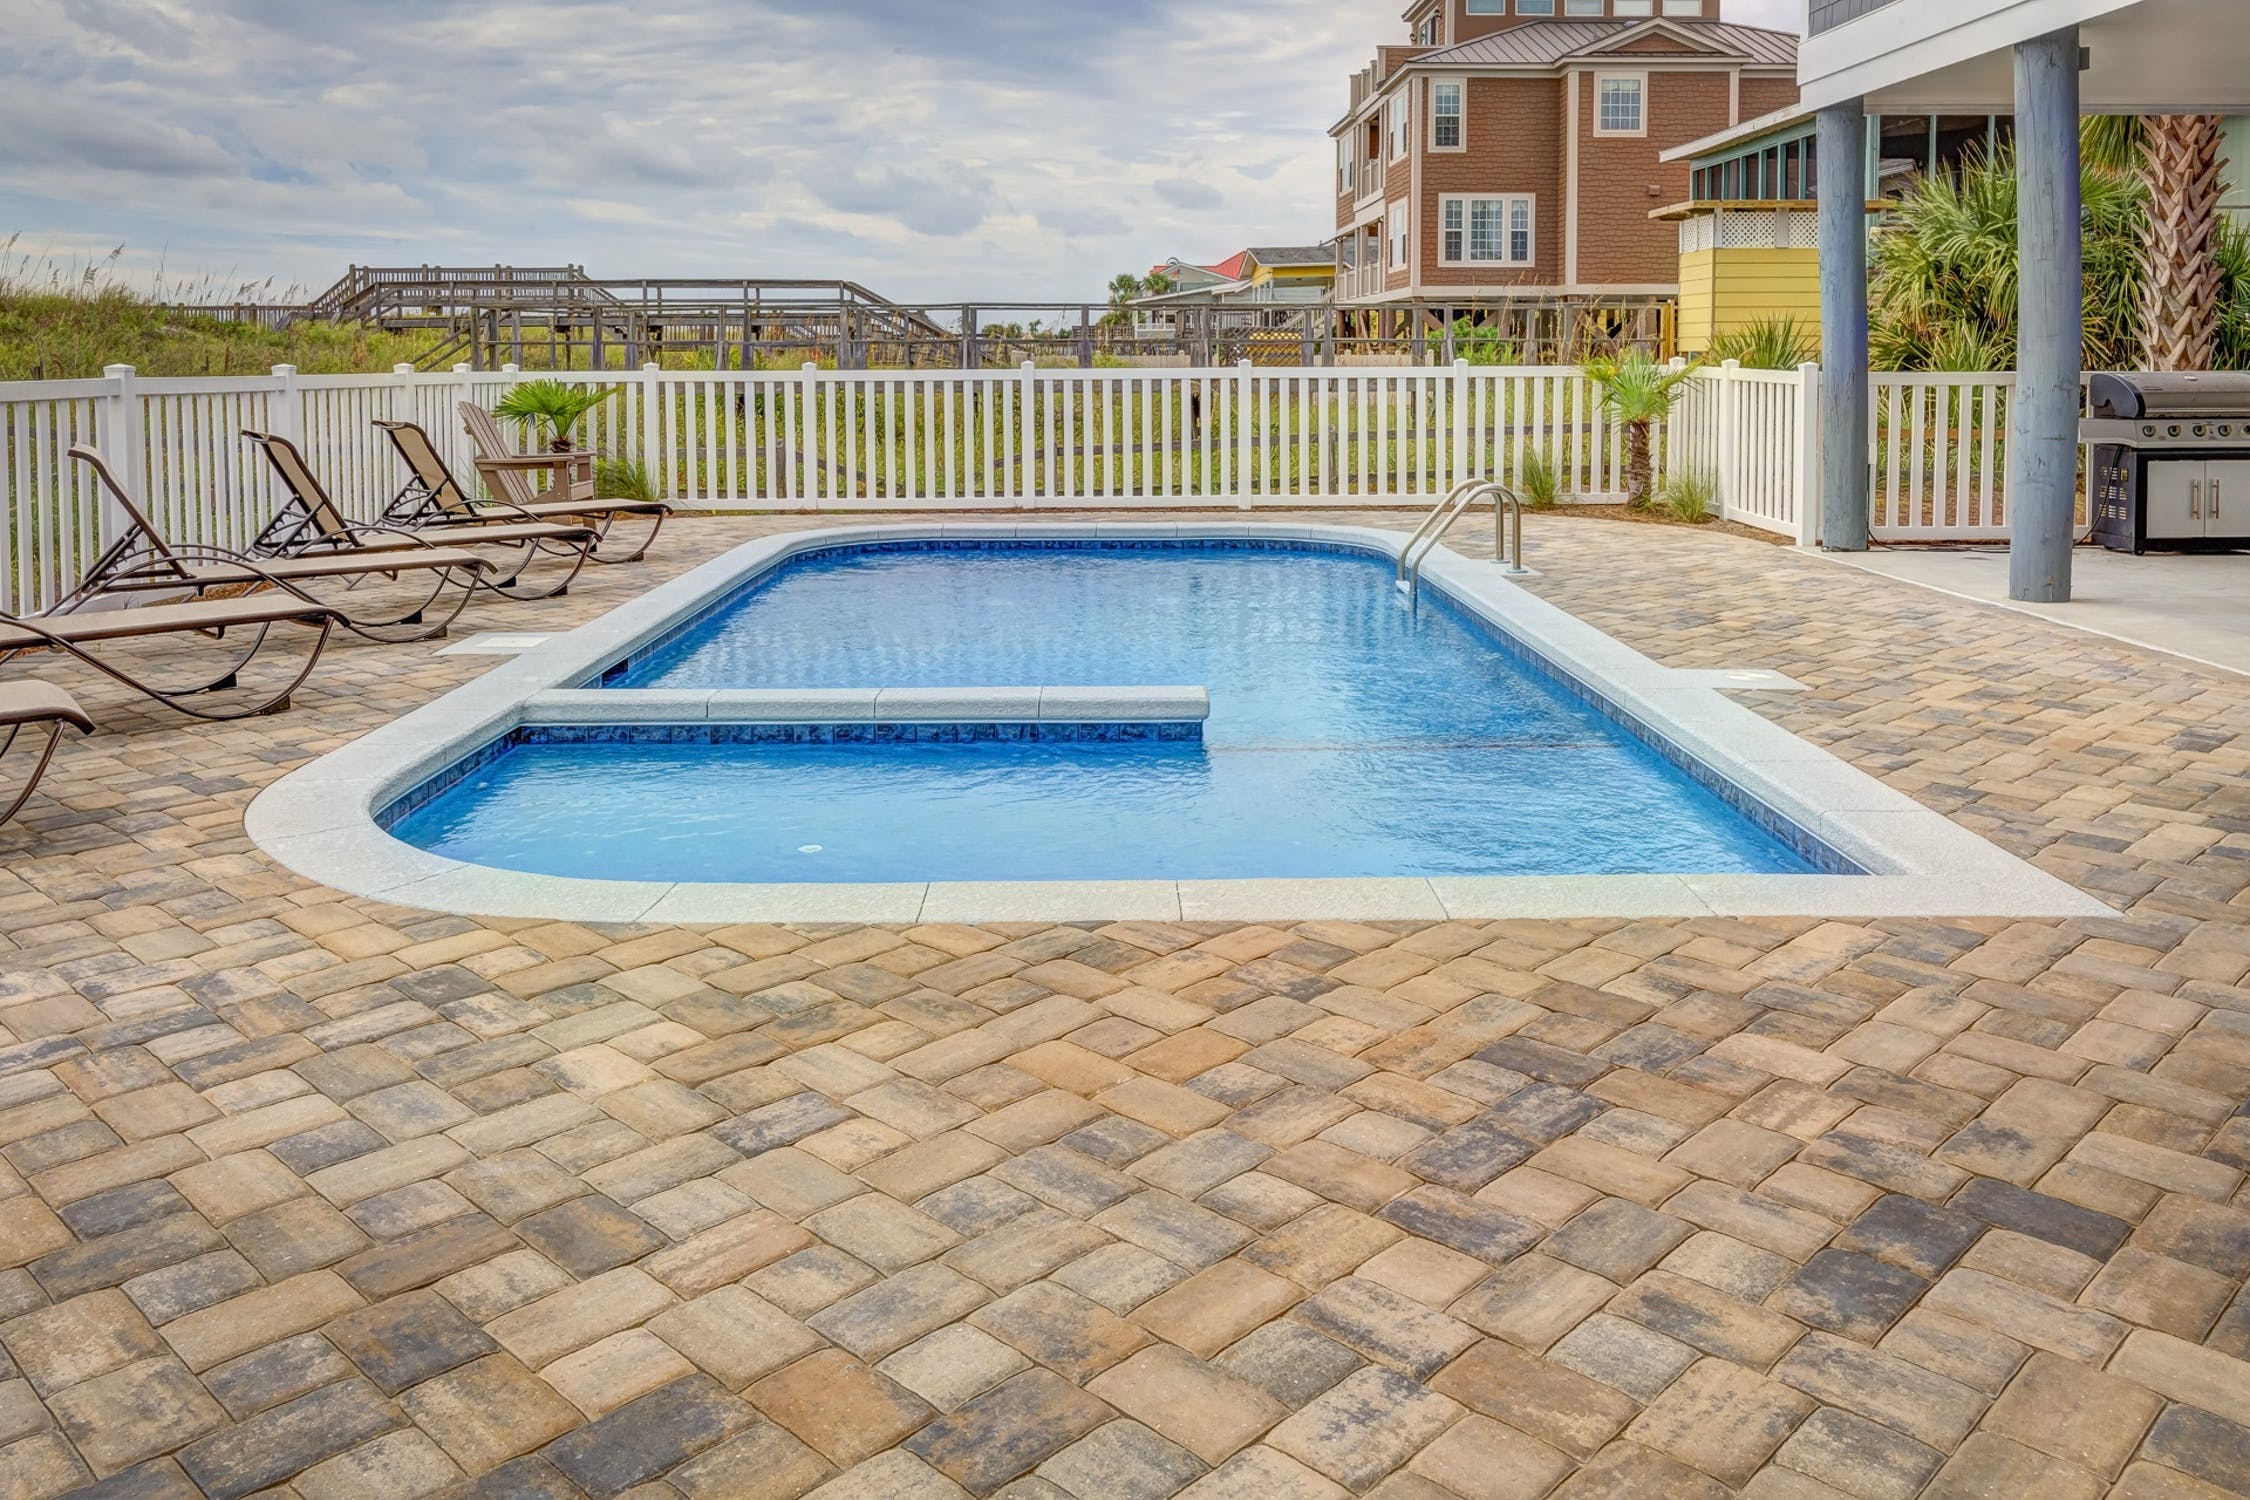 Backyard pool with stone patio